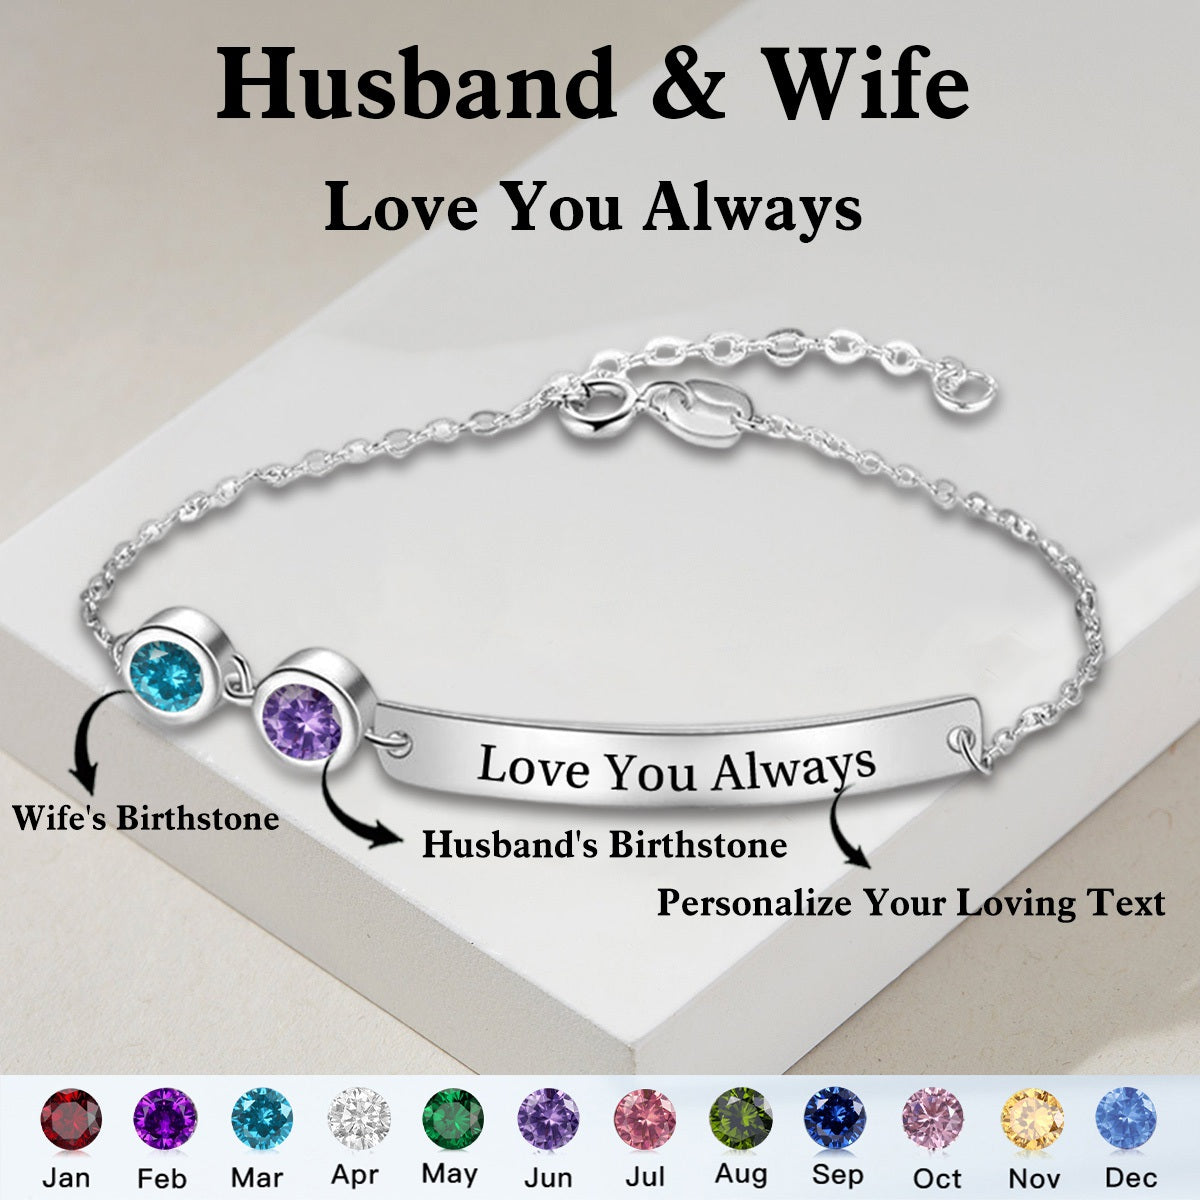 Love You Always - Personalized Couple Birthstones Bracelet